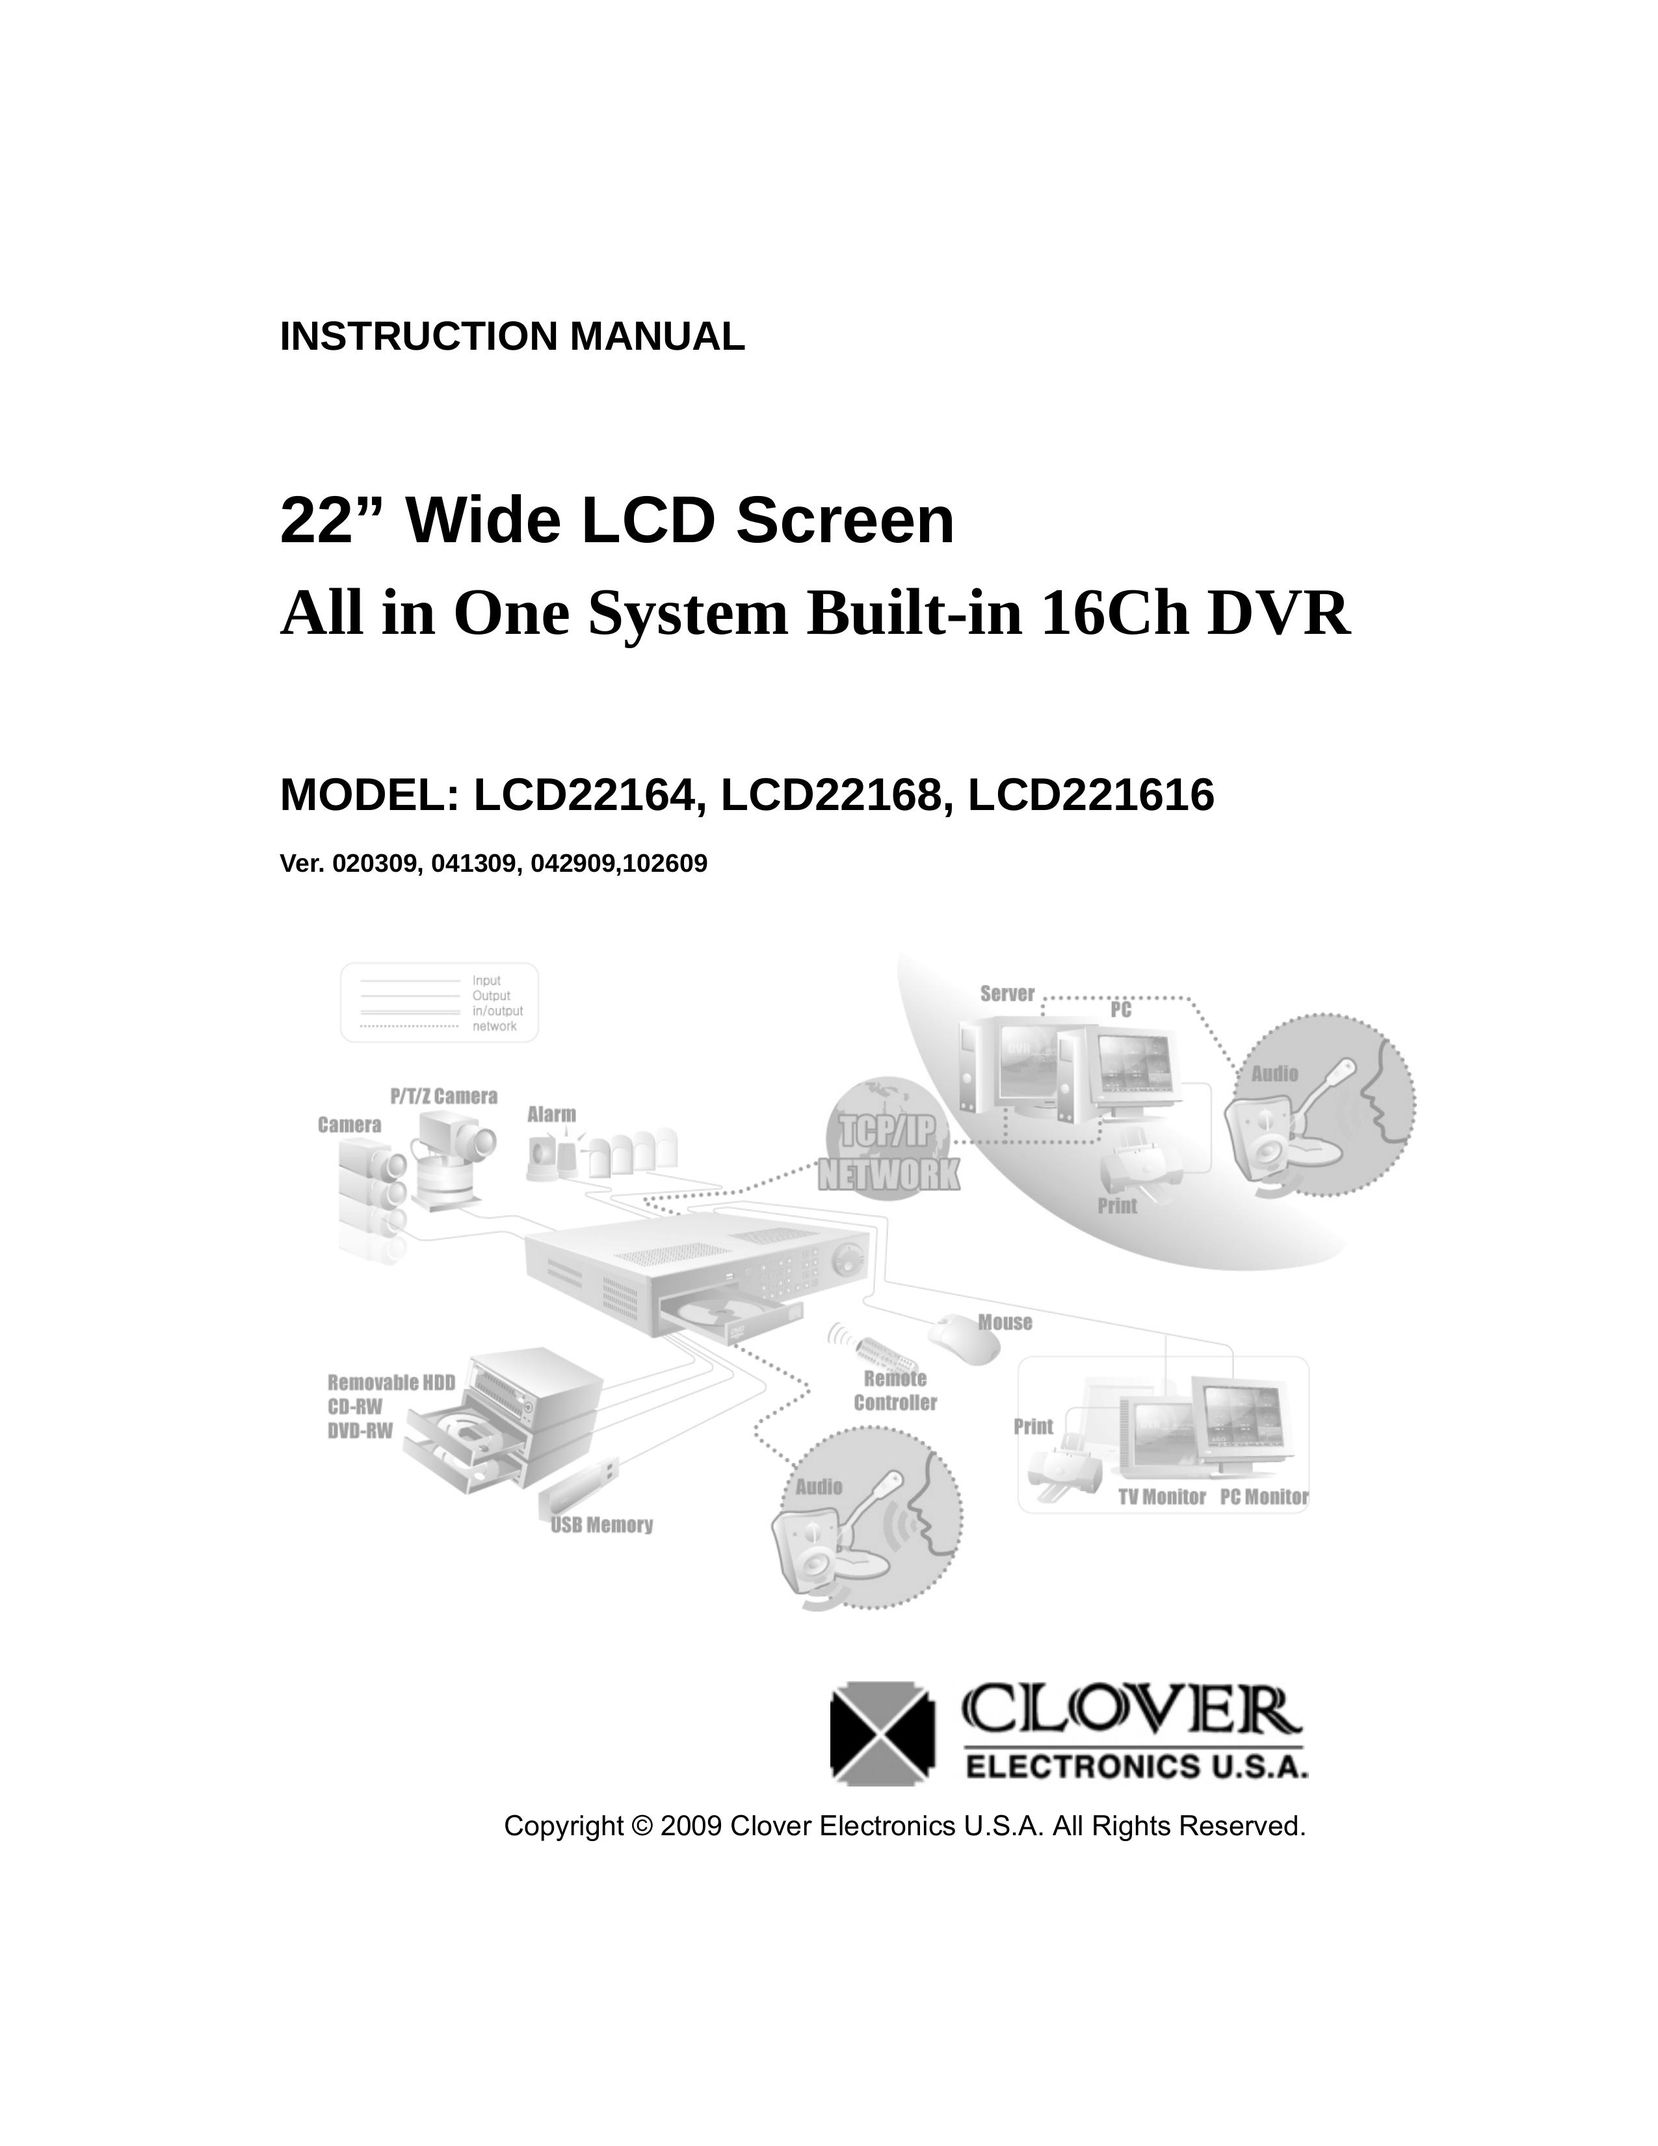 Clover Electronics LCD22164 DVR User Manual